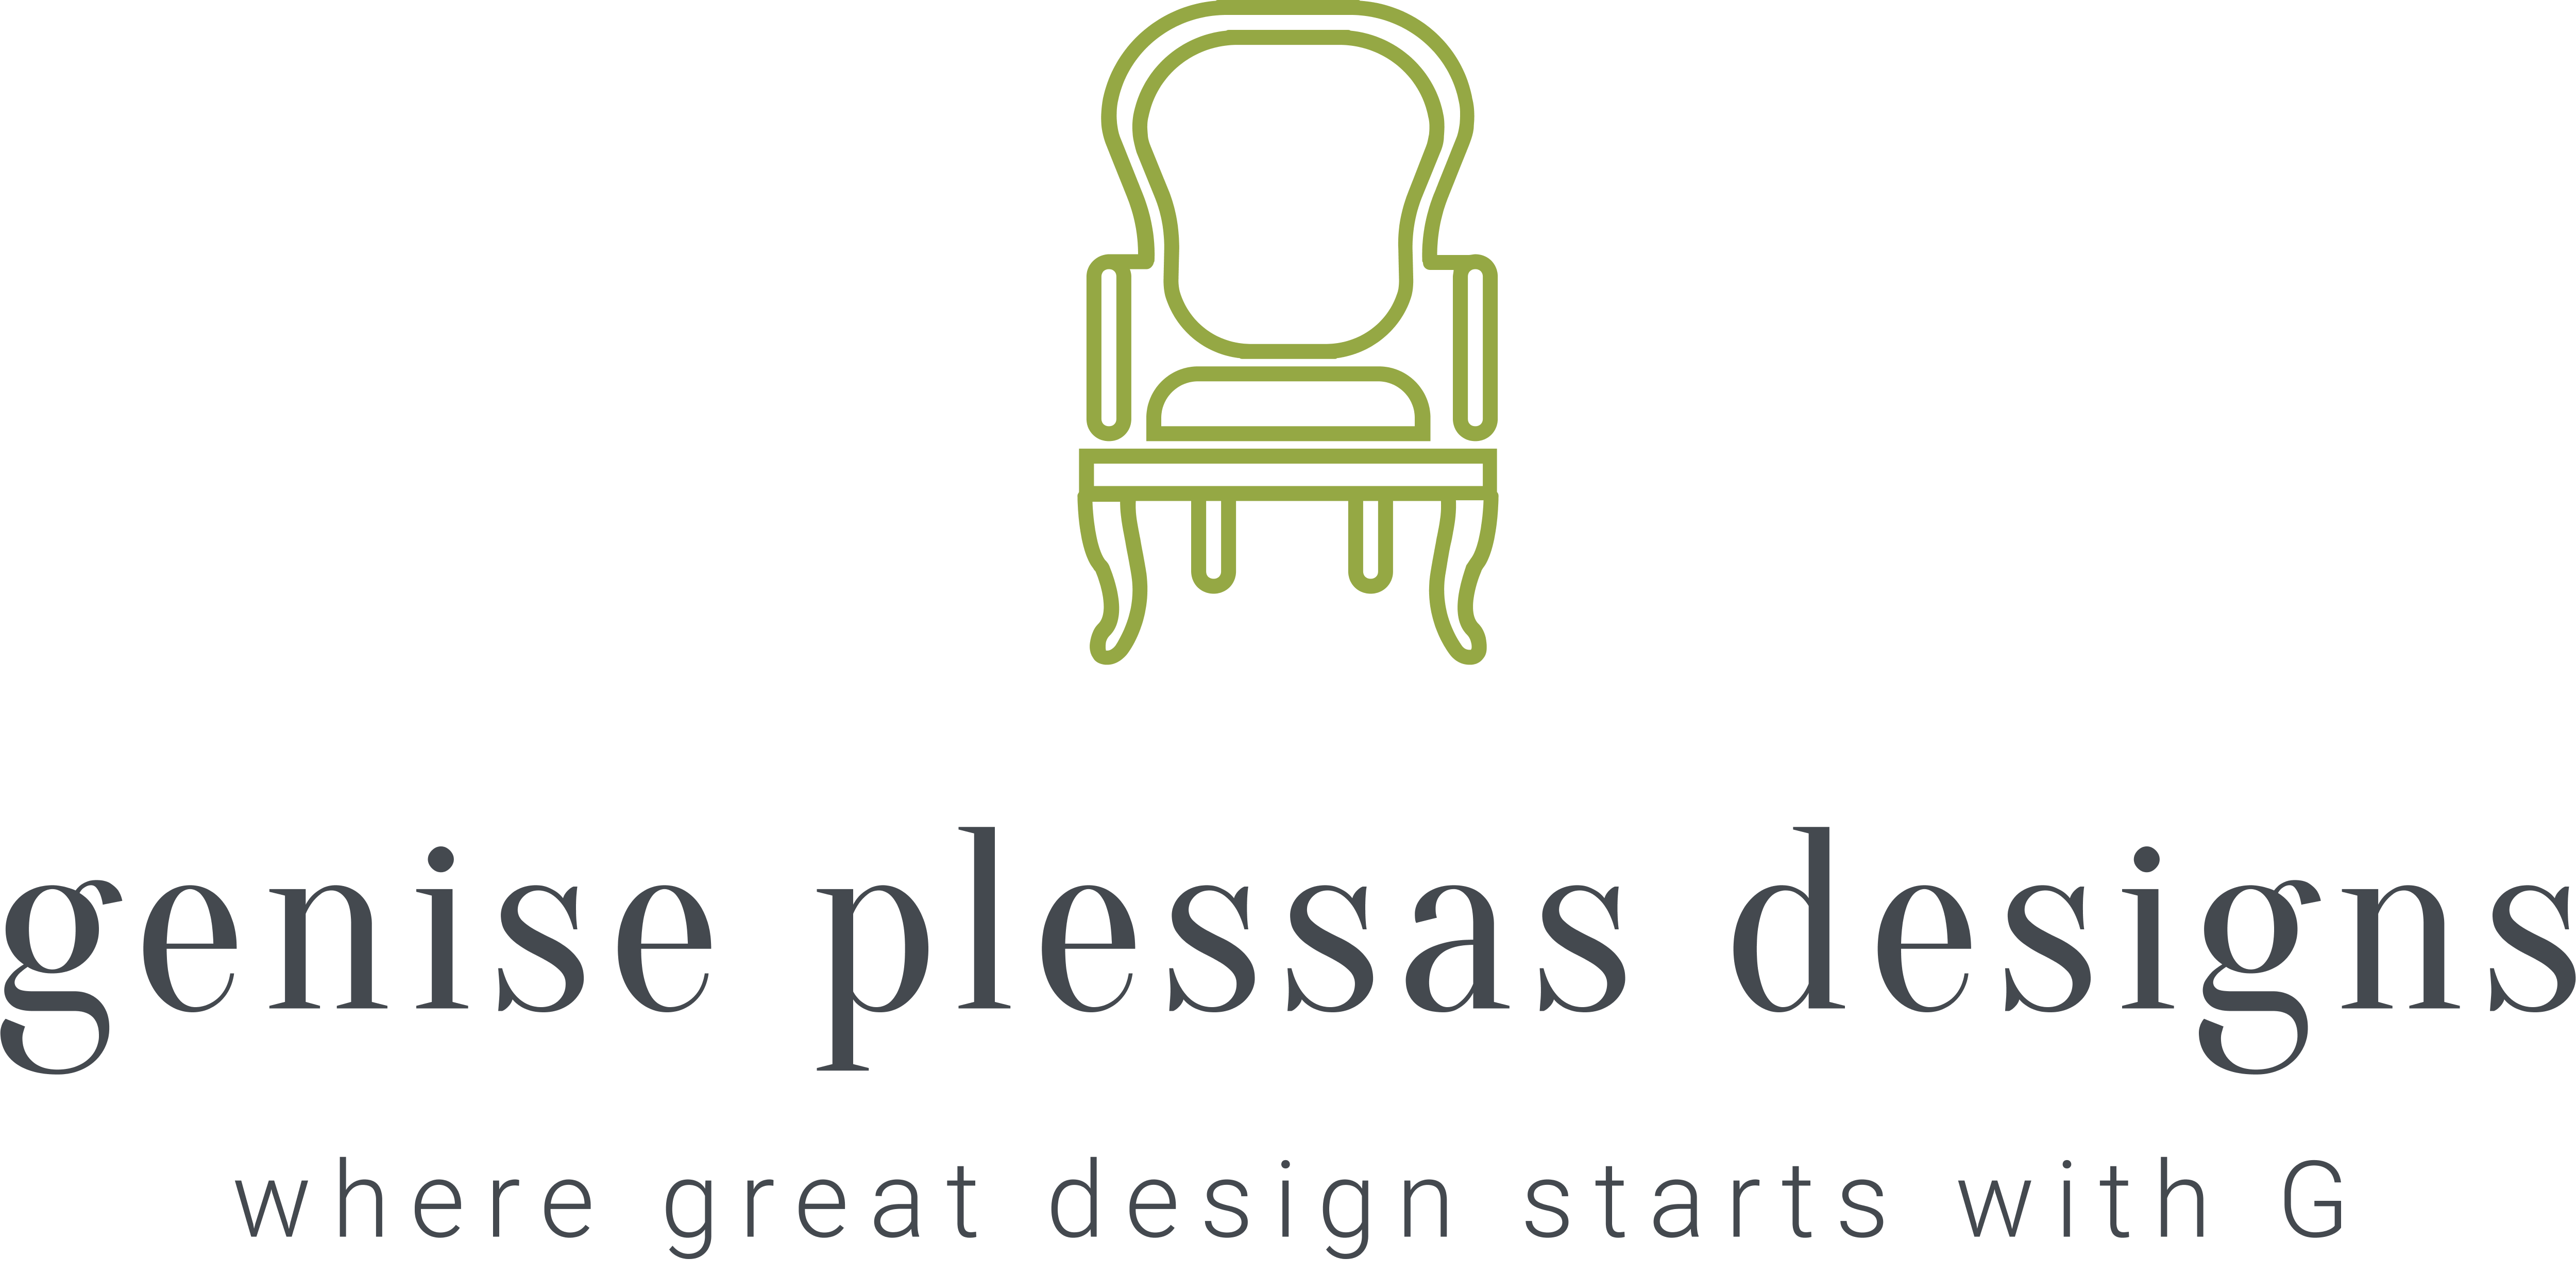 genise plessas designs